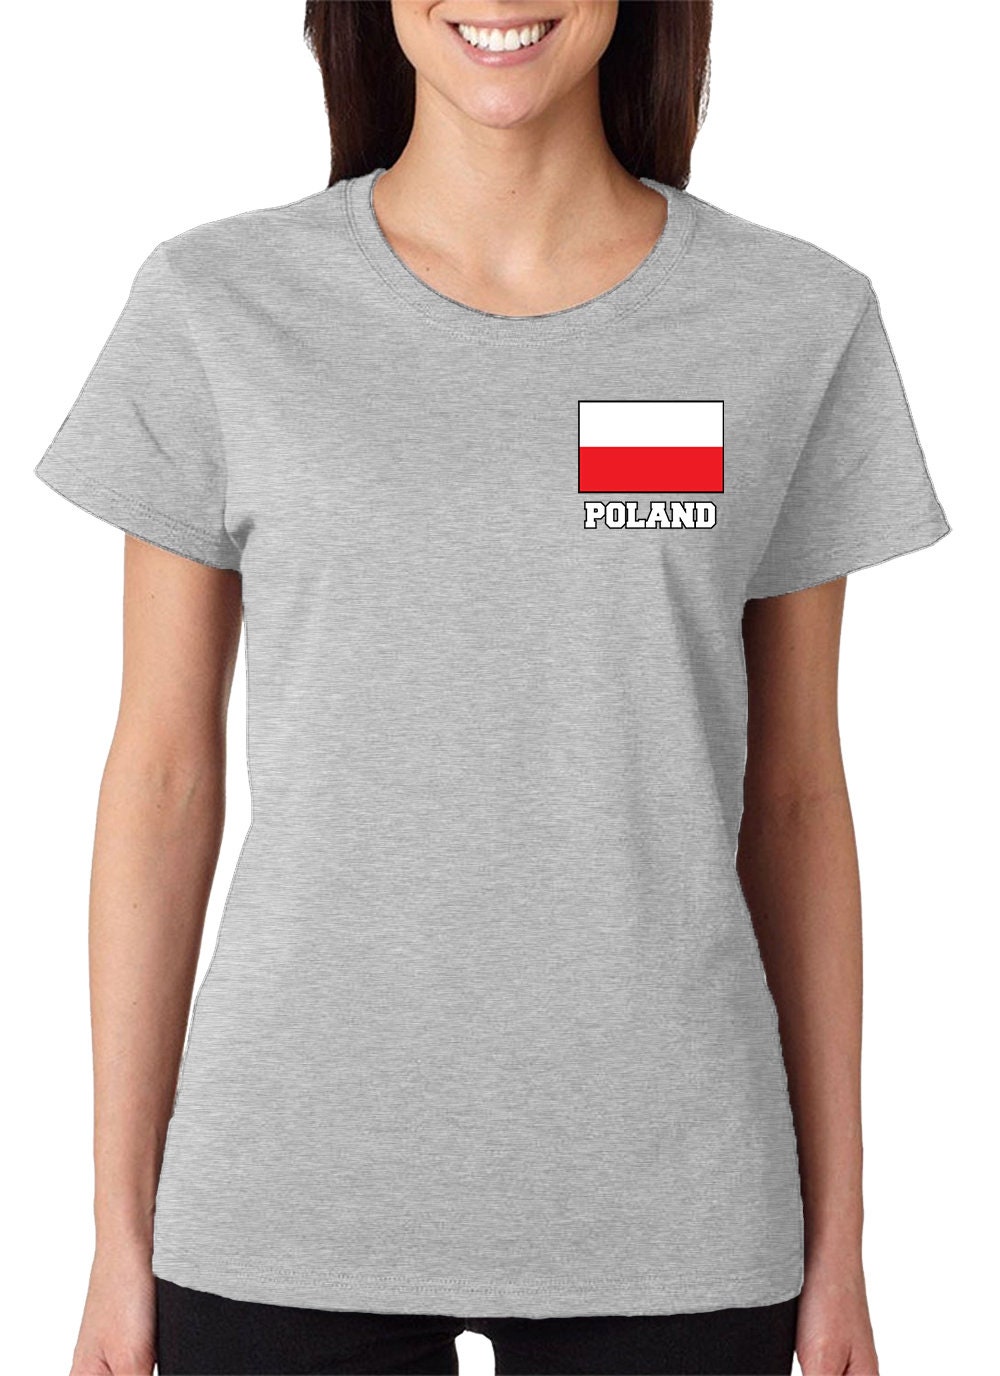 Poland Series 2 Country Pride Chest Flag Polska Warsaw Lodz | Etsy